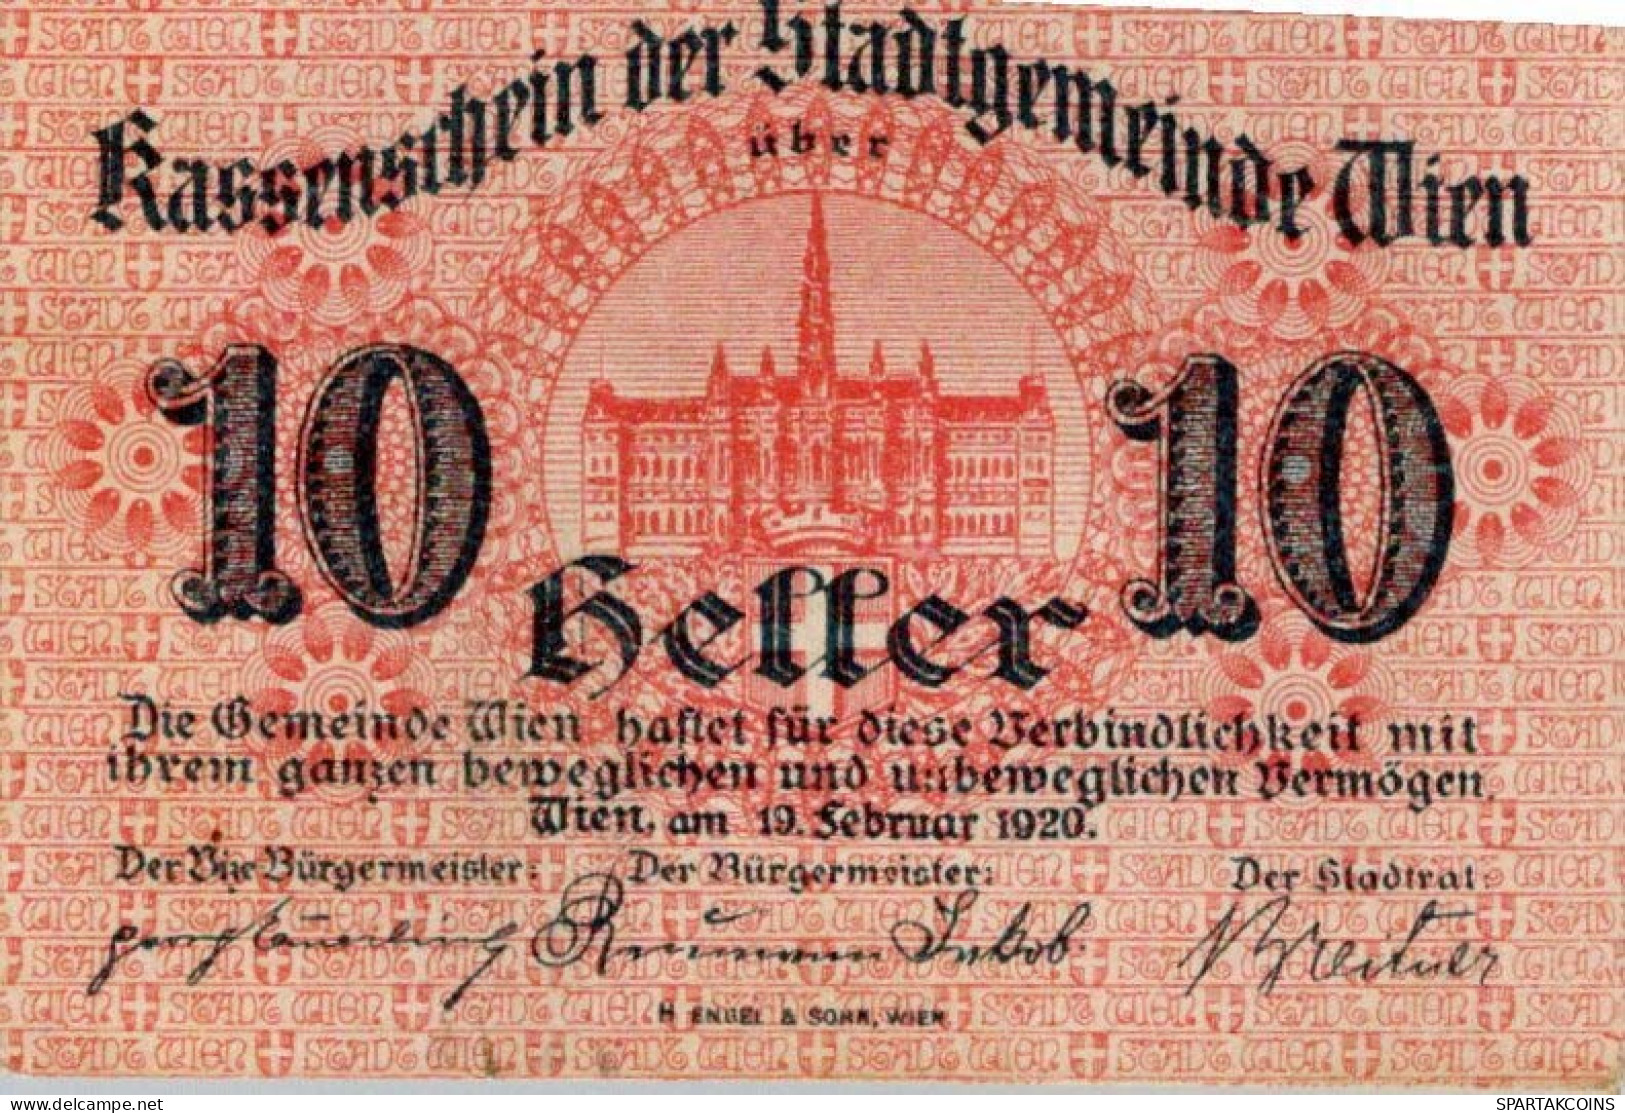 10 HELLER 1919 Stadt Wien Österreich Notgeld Banknote #PE003 - [11] Local Banknote Issues